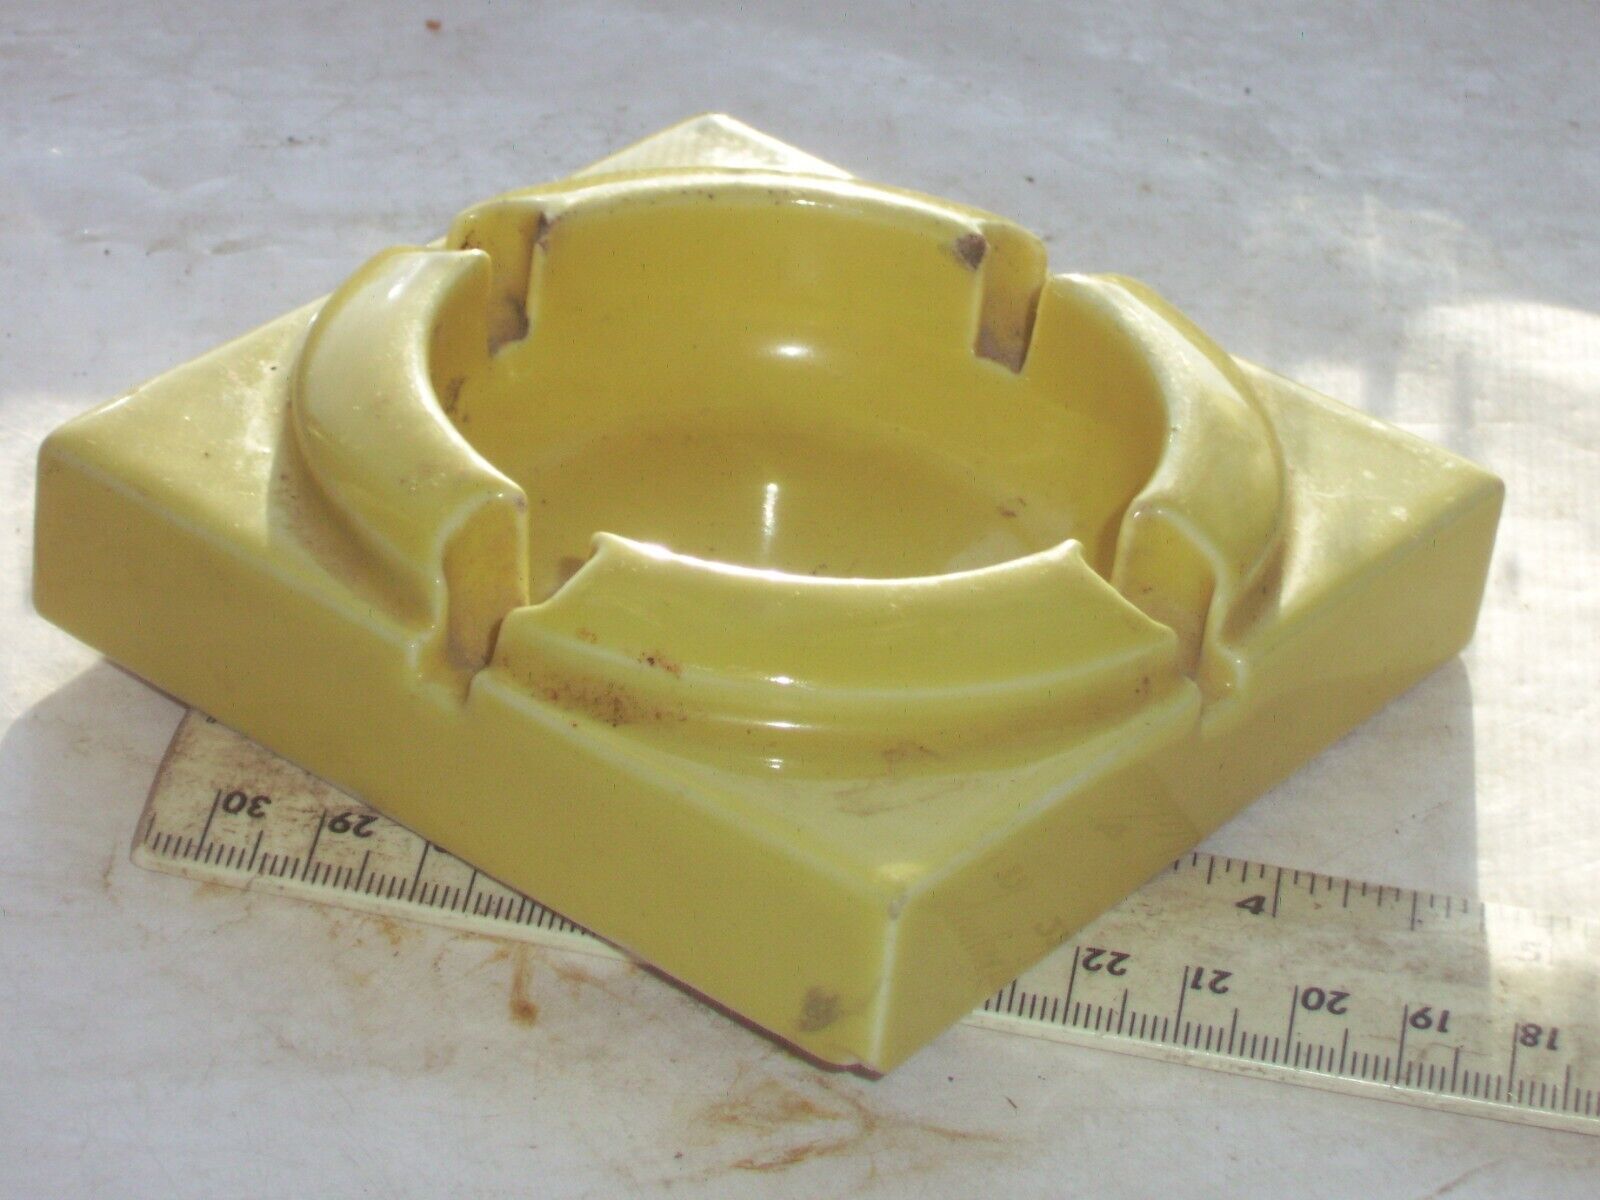 Rare yellow glazed Art Deco ashtray, with small nick on corner base